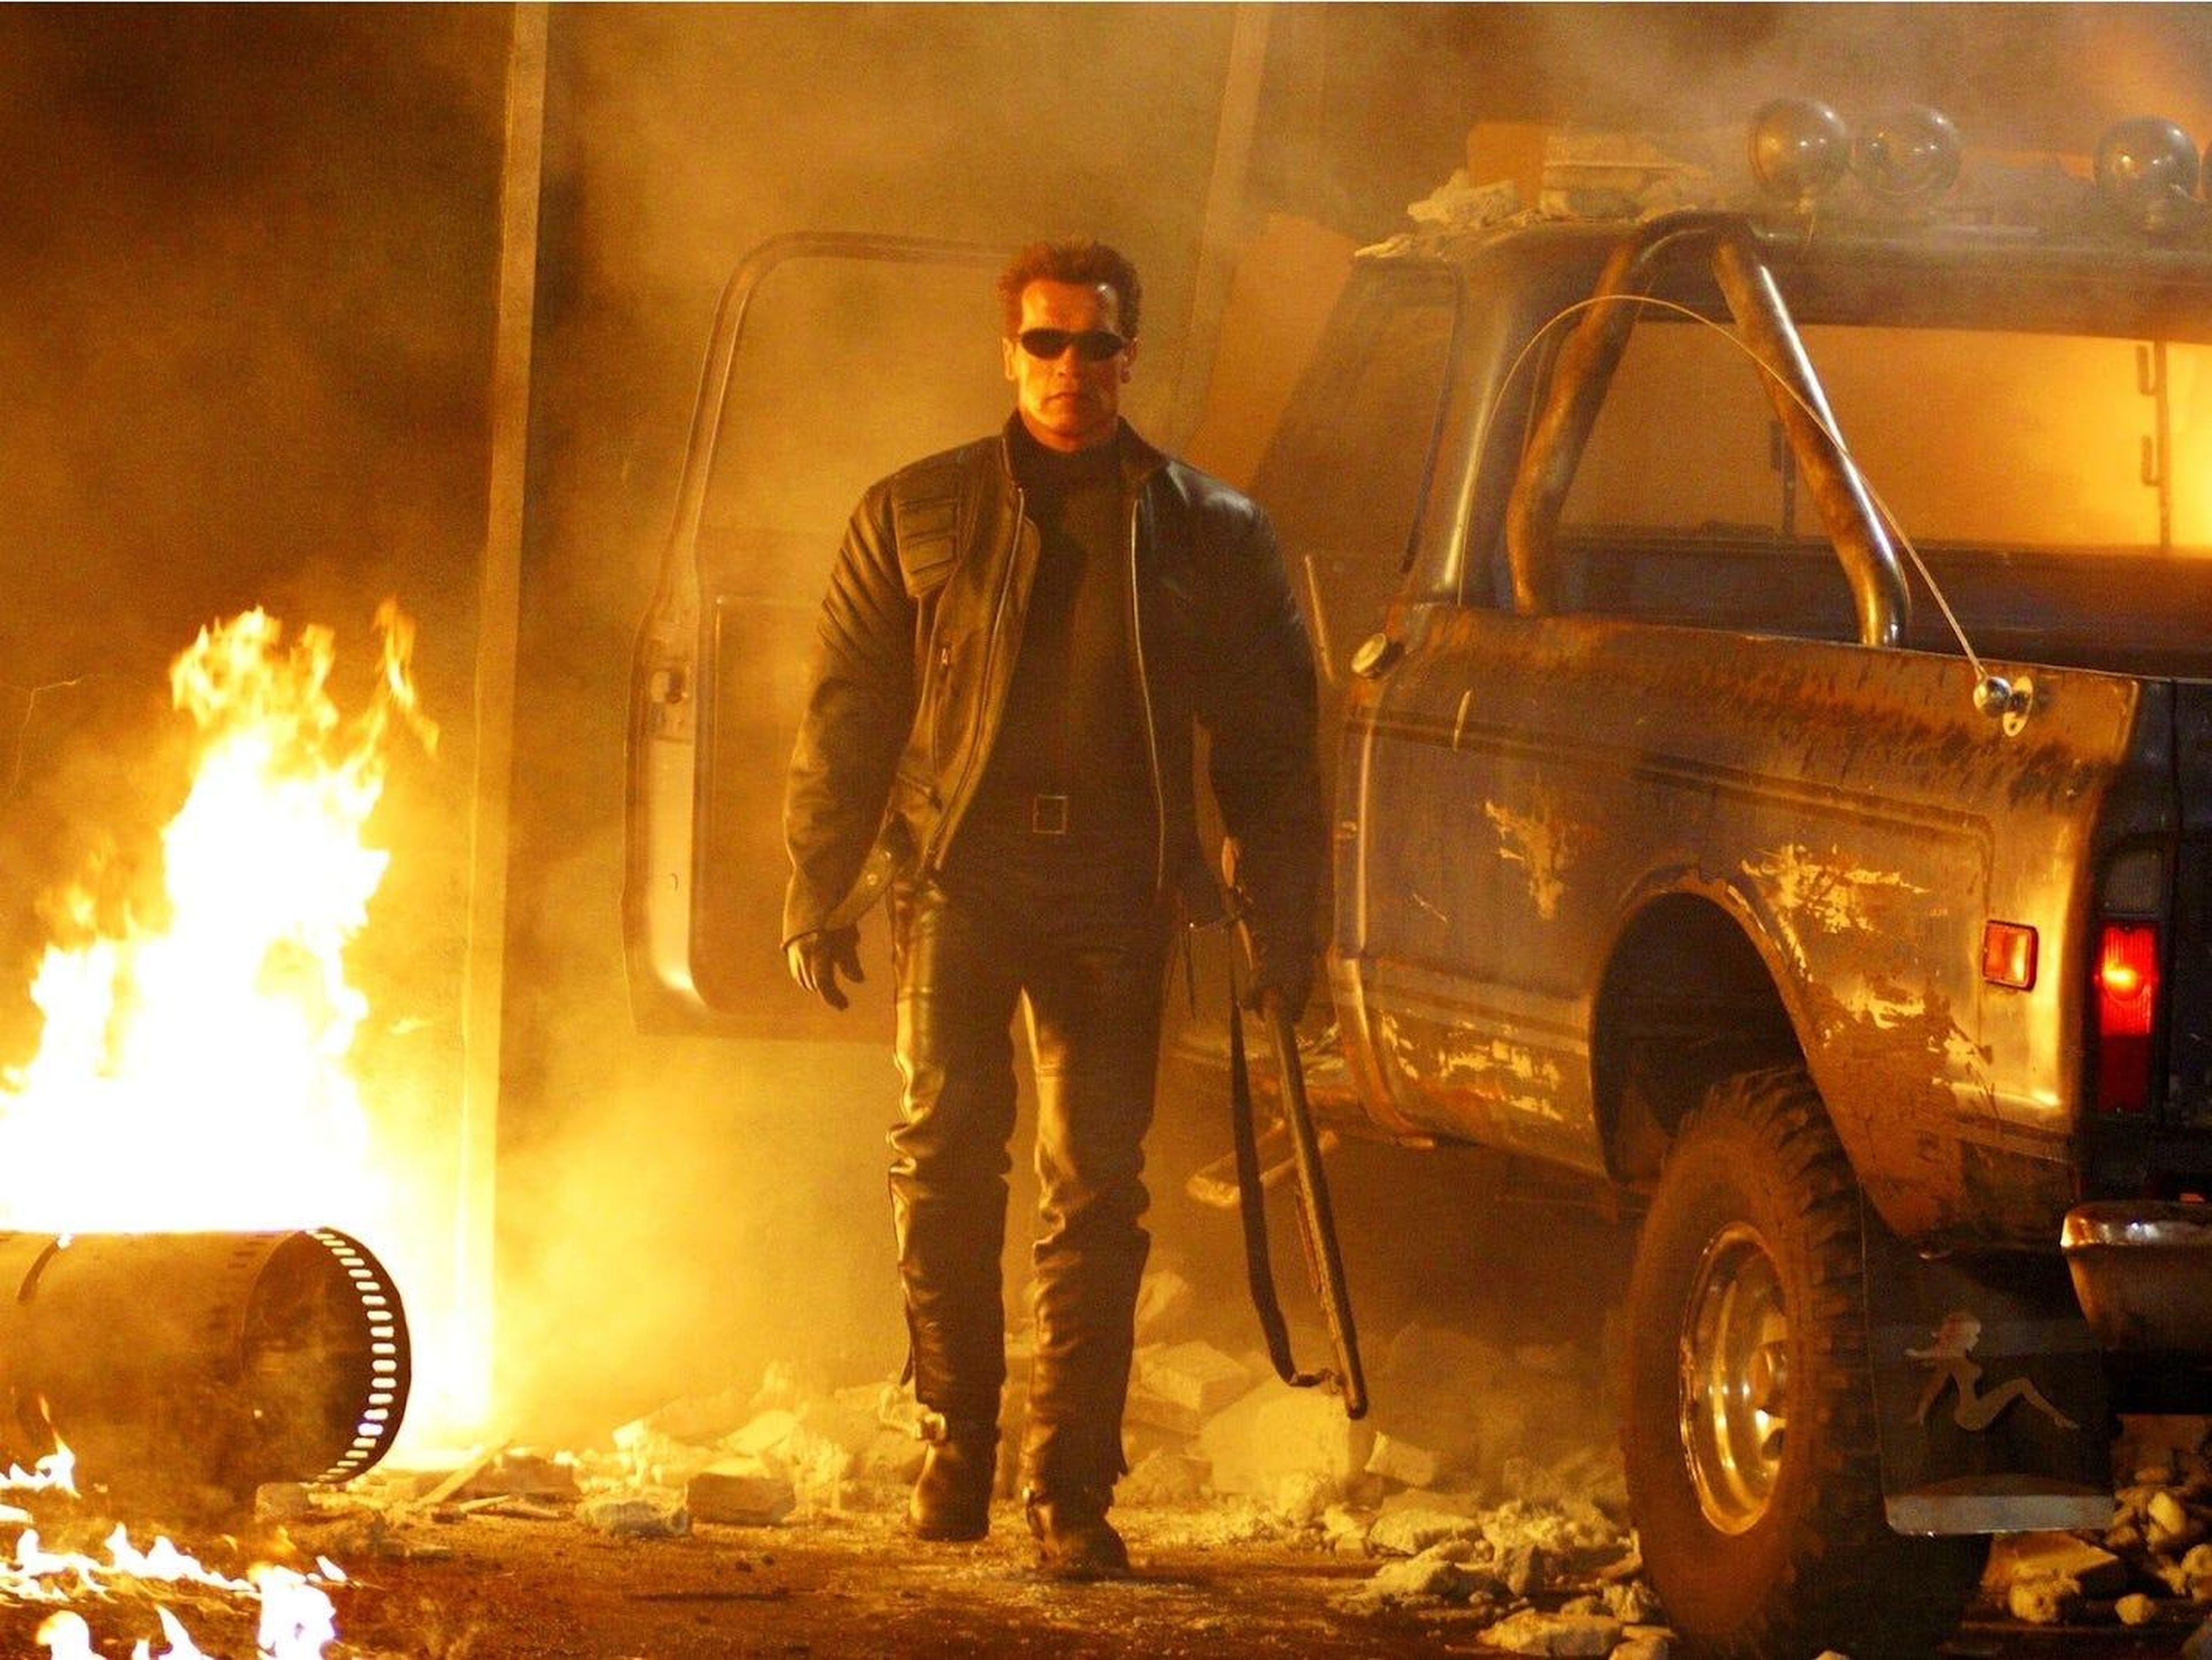 17. Arnold Schwarzenegger as The Terminator in "Terminator 3: Rise of the Machines"